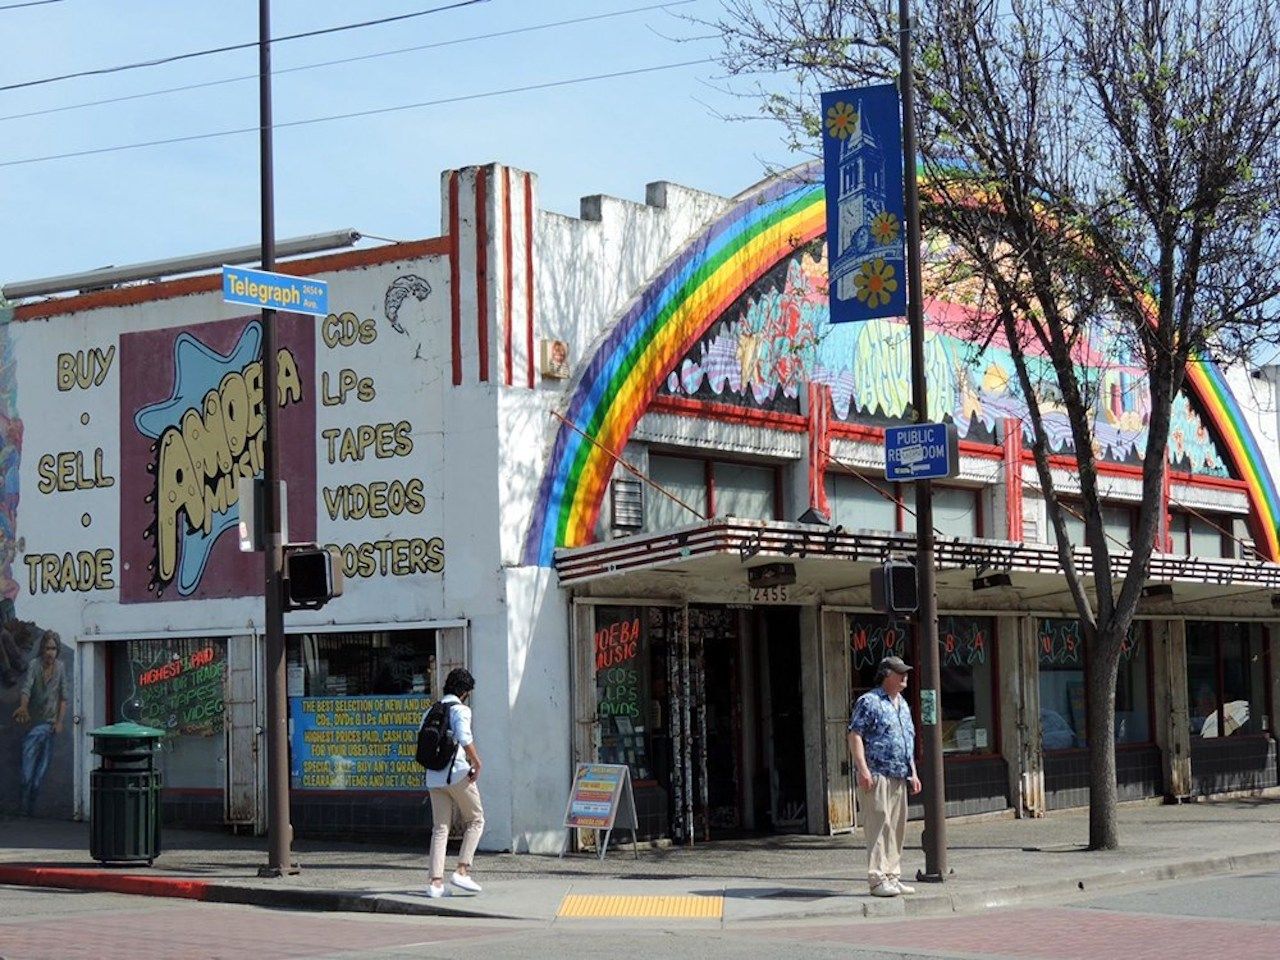 Amoeba record store in Berkeley, California